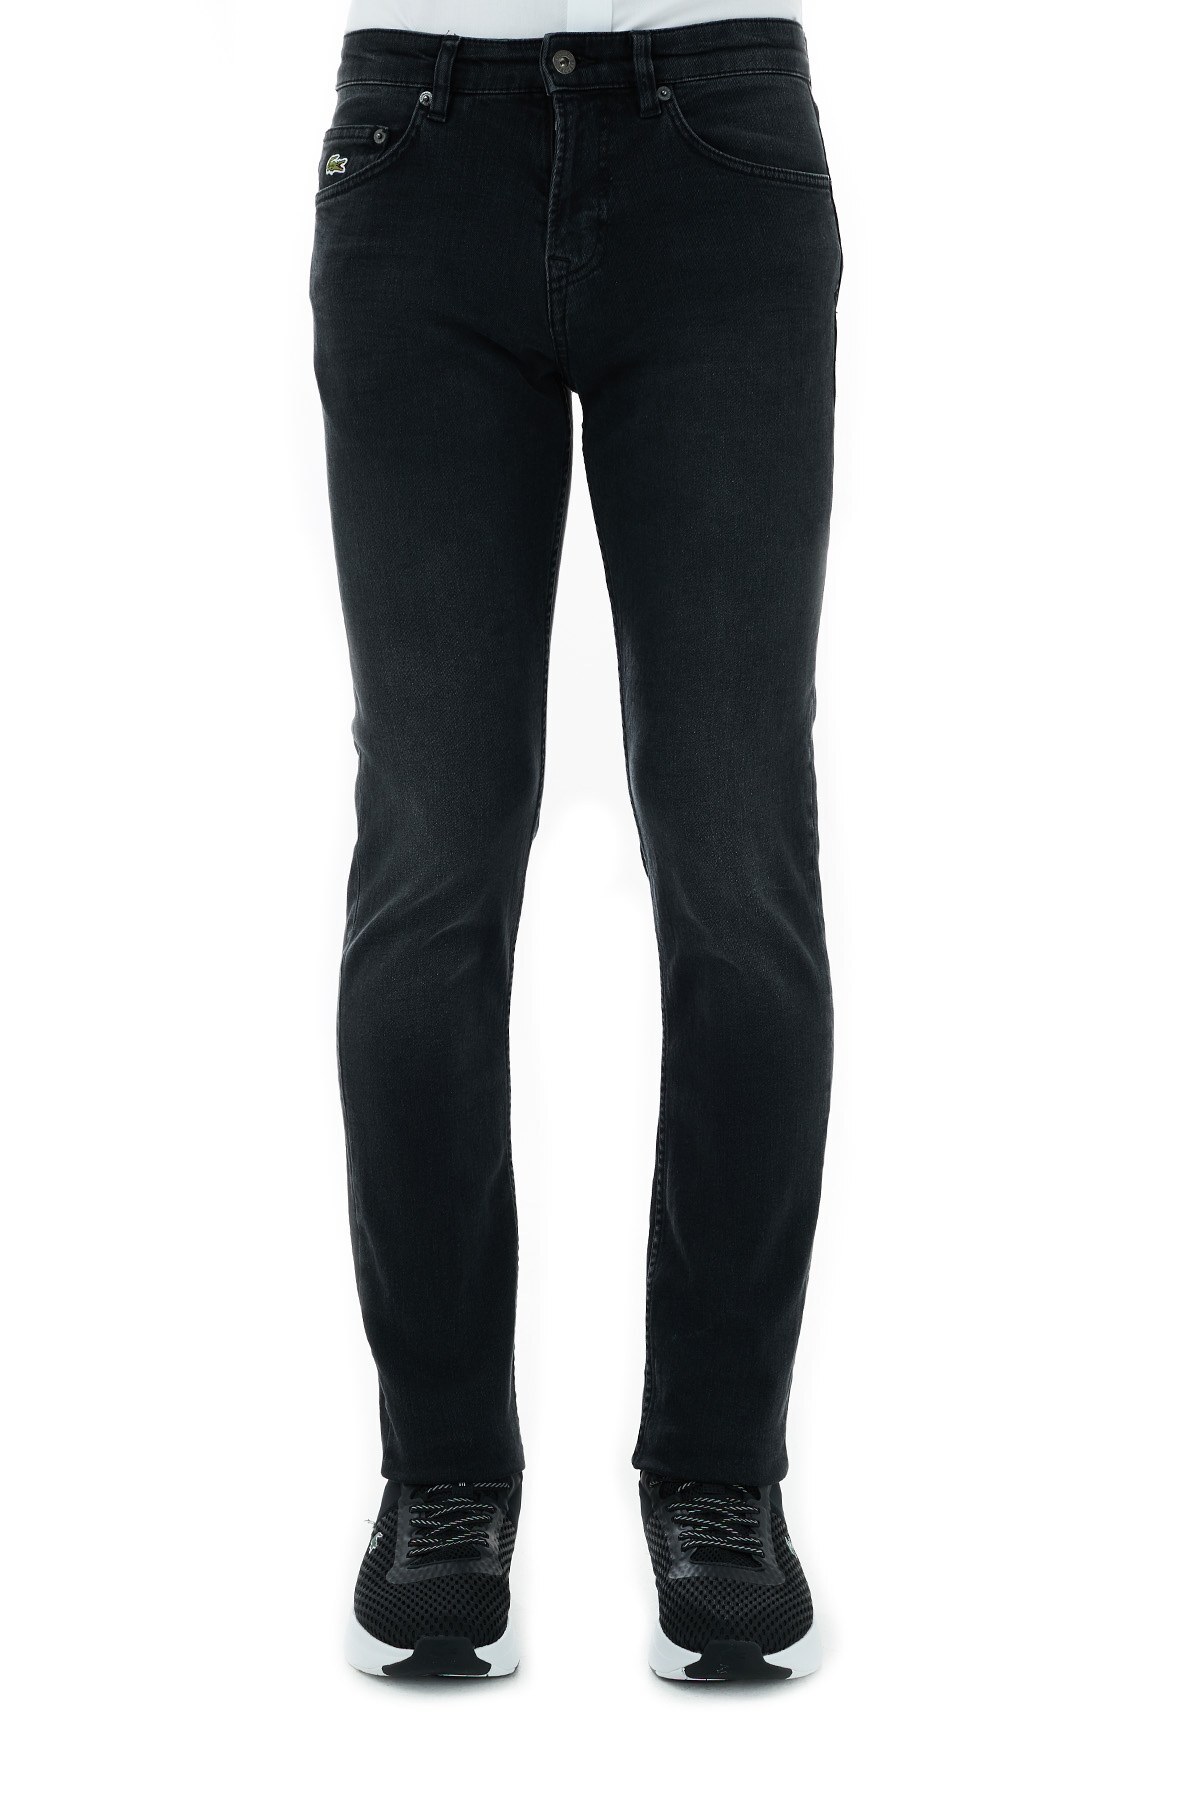 Lacoste Slim Fit Pamuklu Erkek Pantolon HH2054 54G GRİ